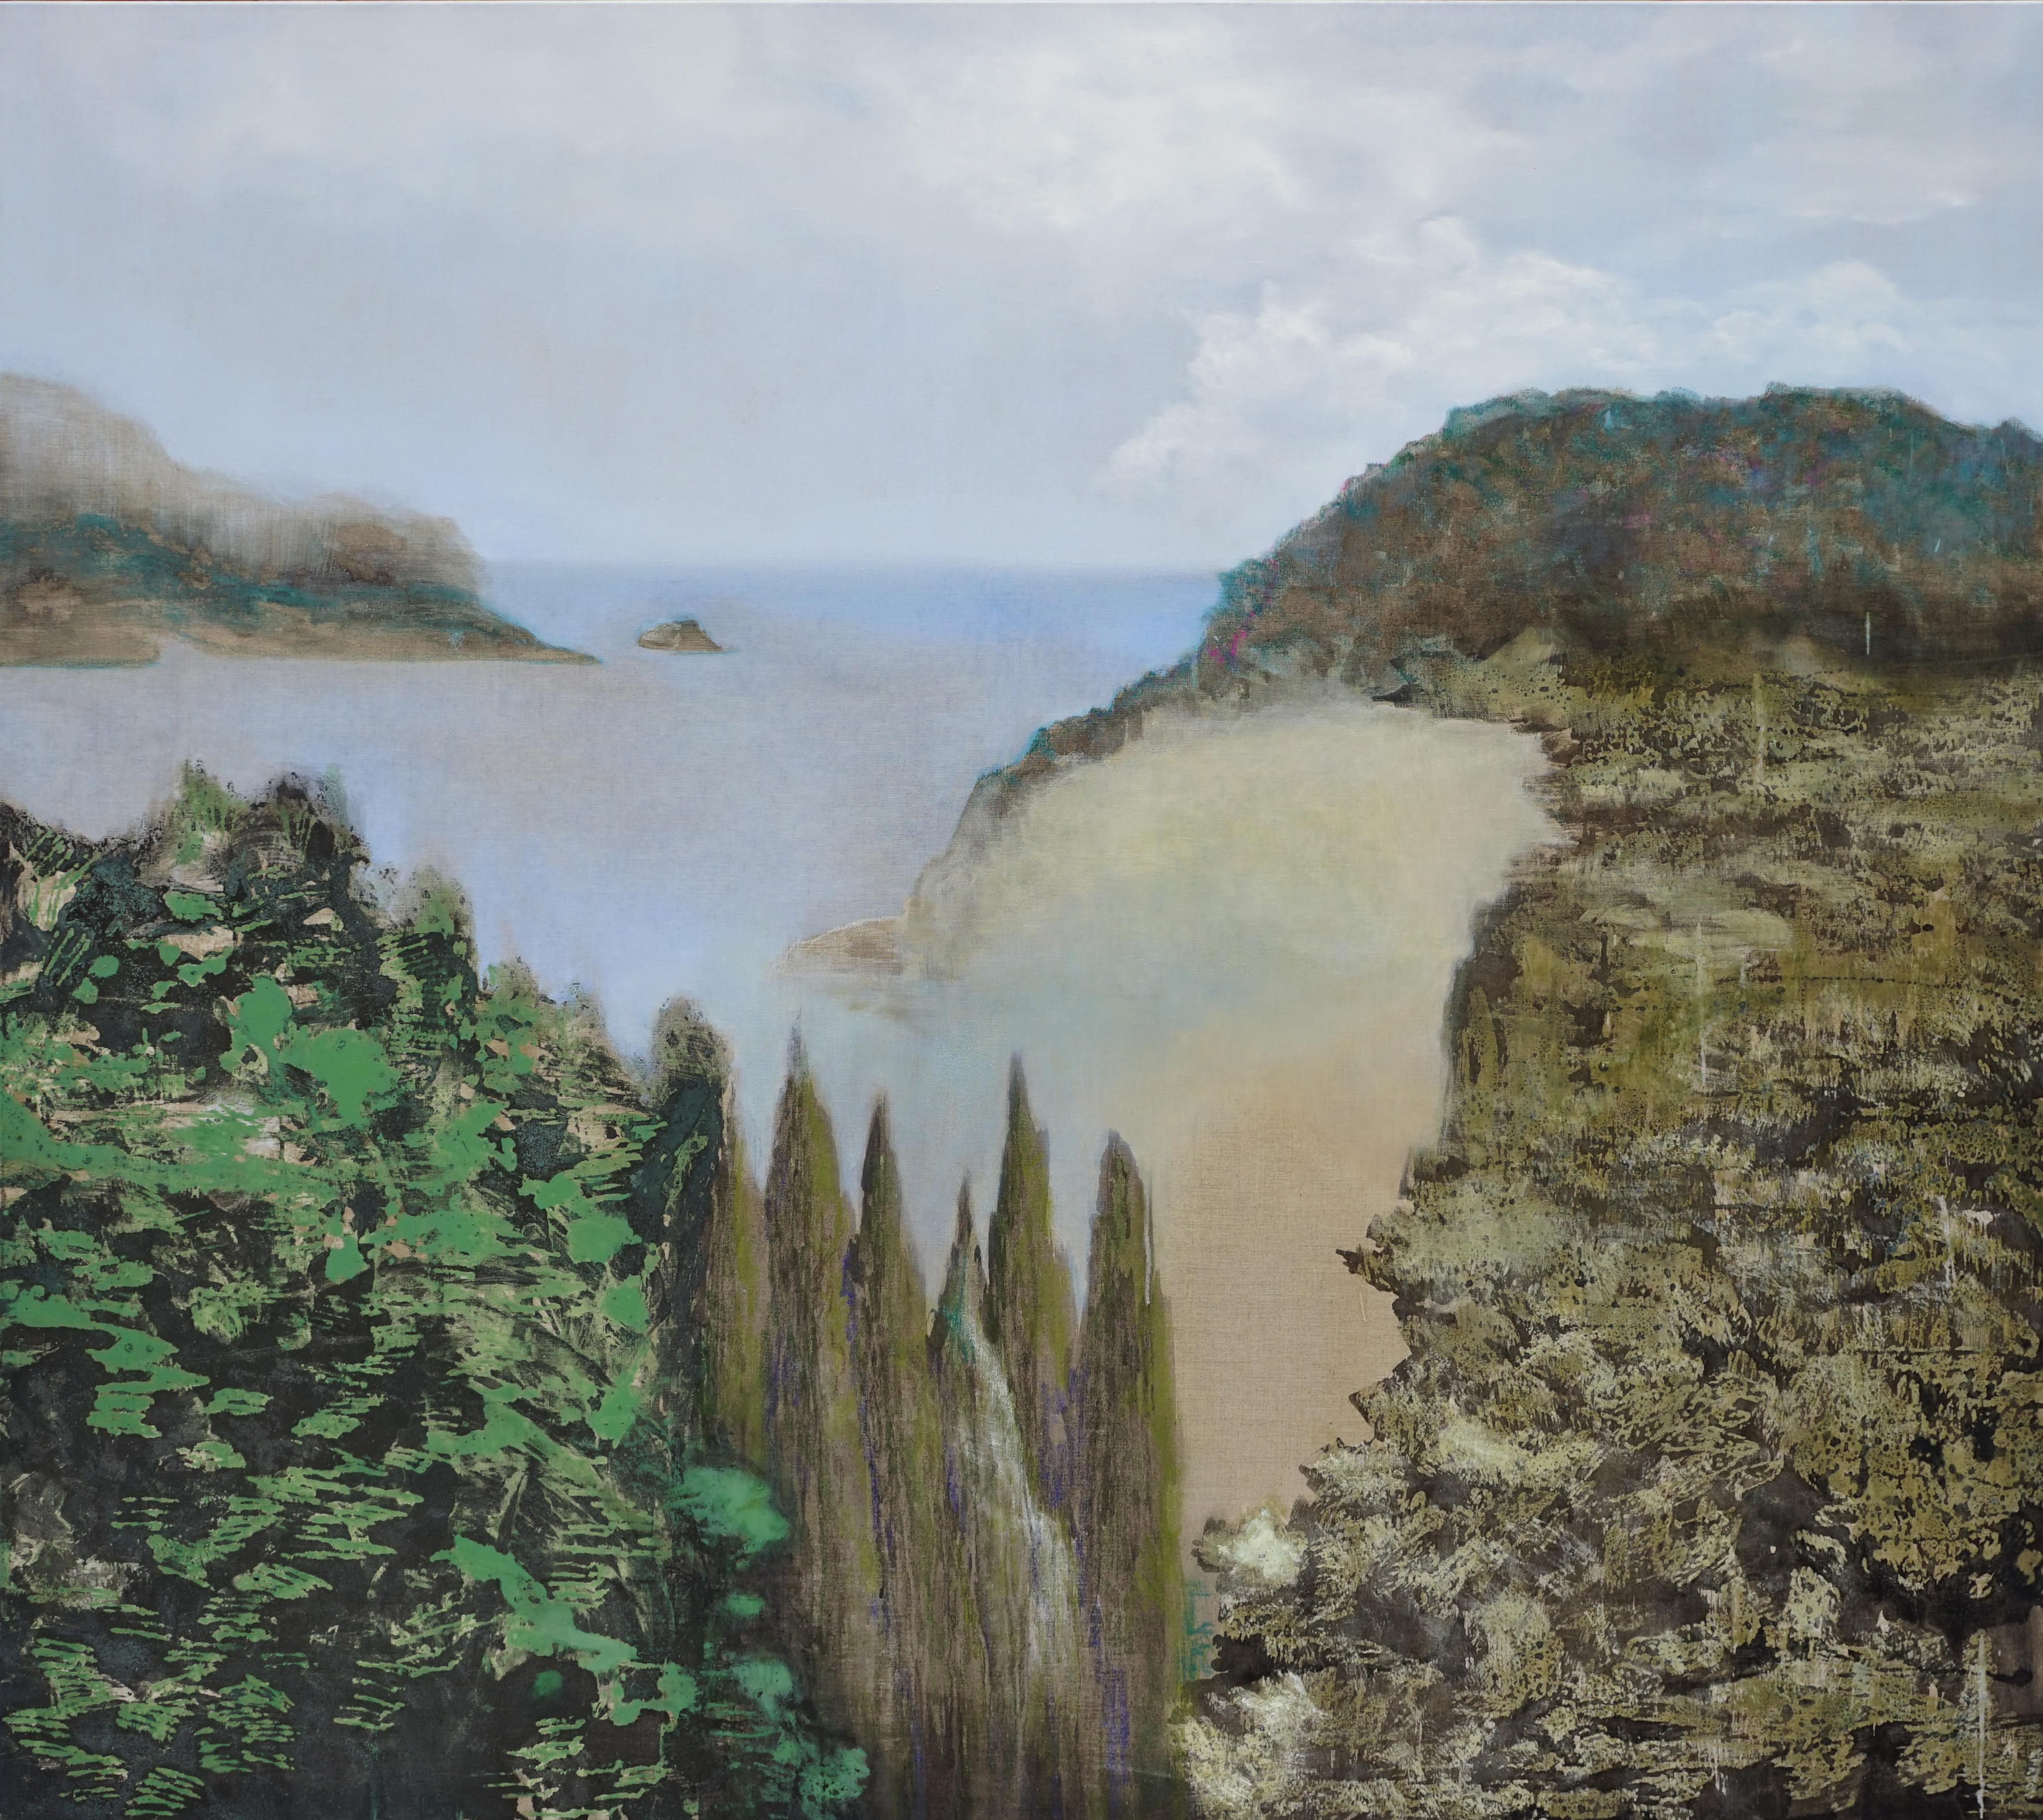 Aleksandra Batura Figurative Painting - Cypresses - Large Format Contemporary Nature Oil Painting, Landscape, Sea Bay